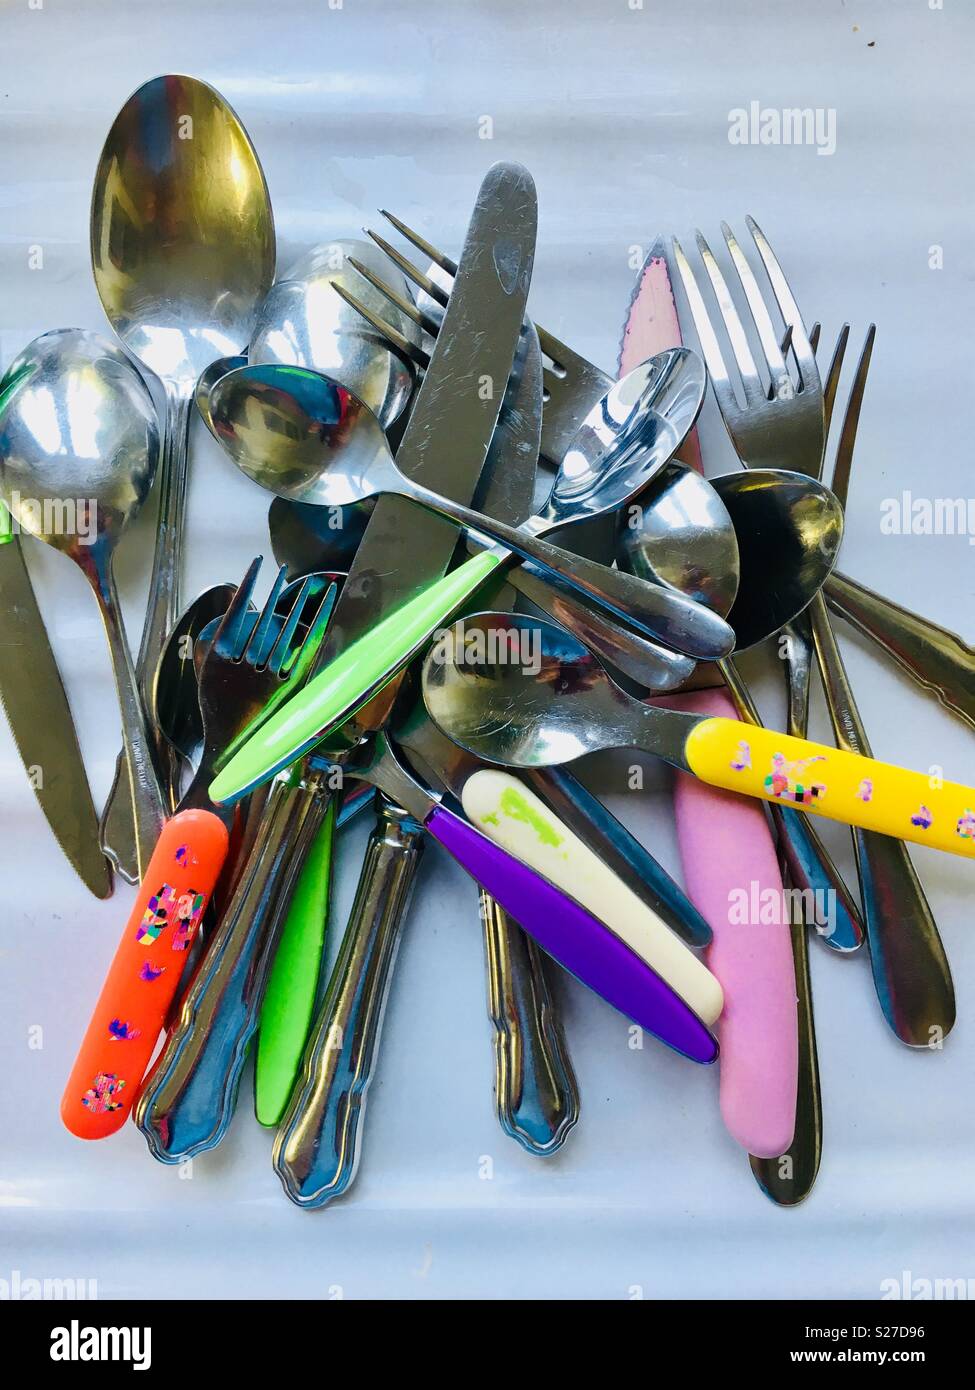 Cutlery pile Stock Photo